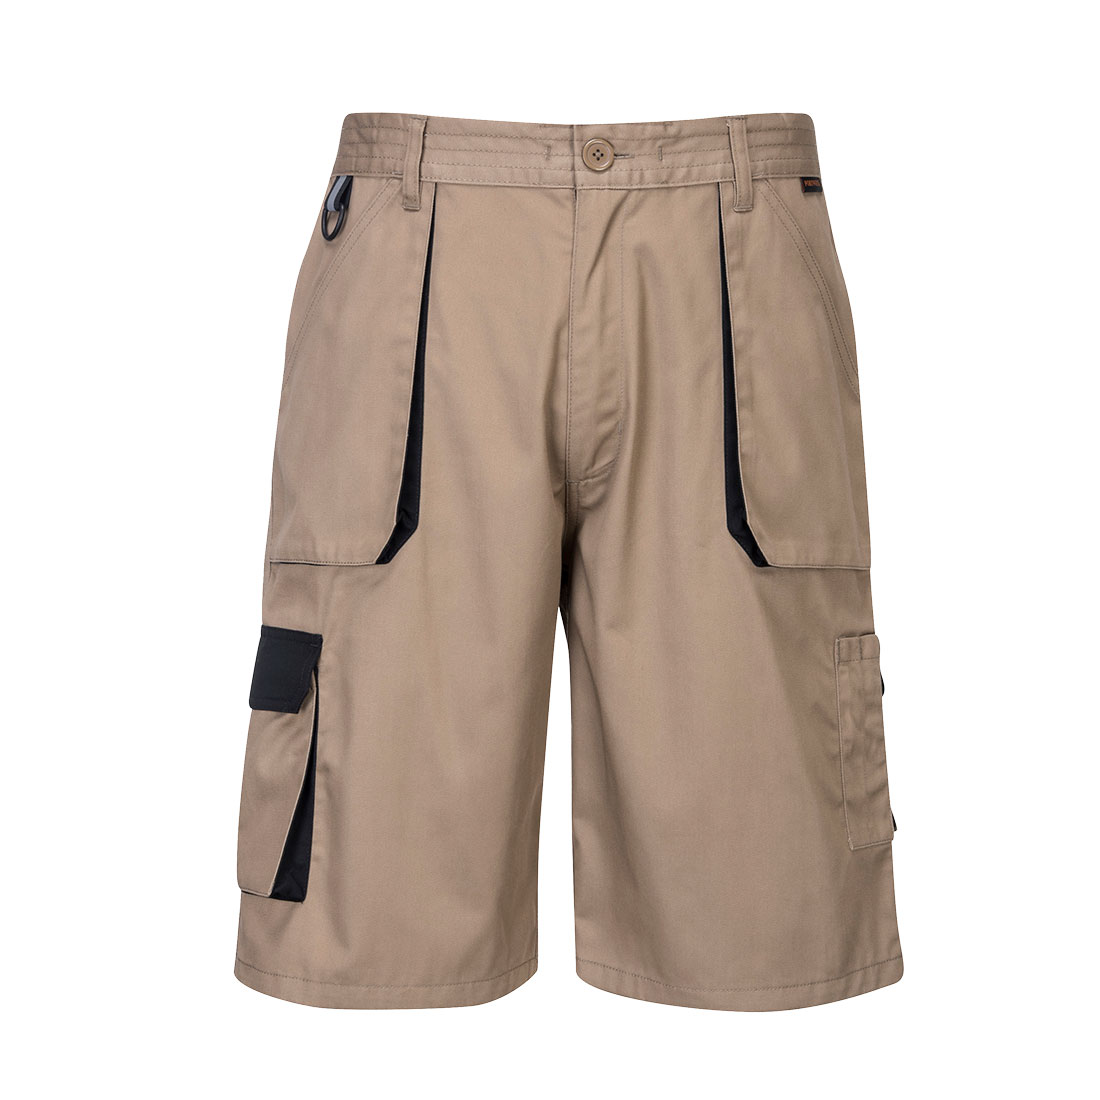 Portwest Texo Contrast Shorts - Epic Khaki